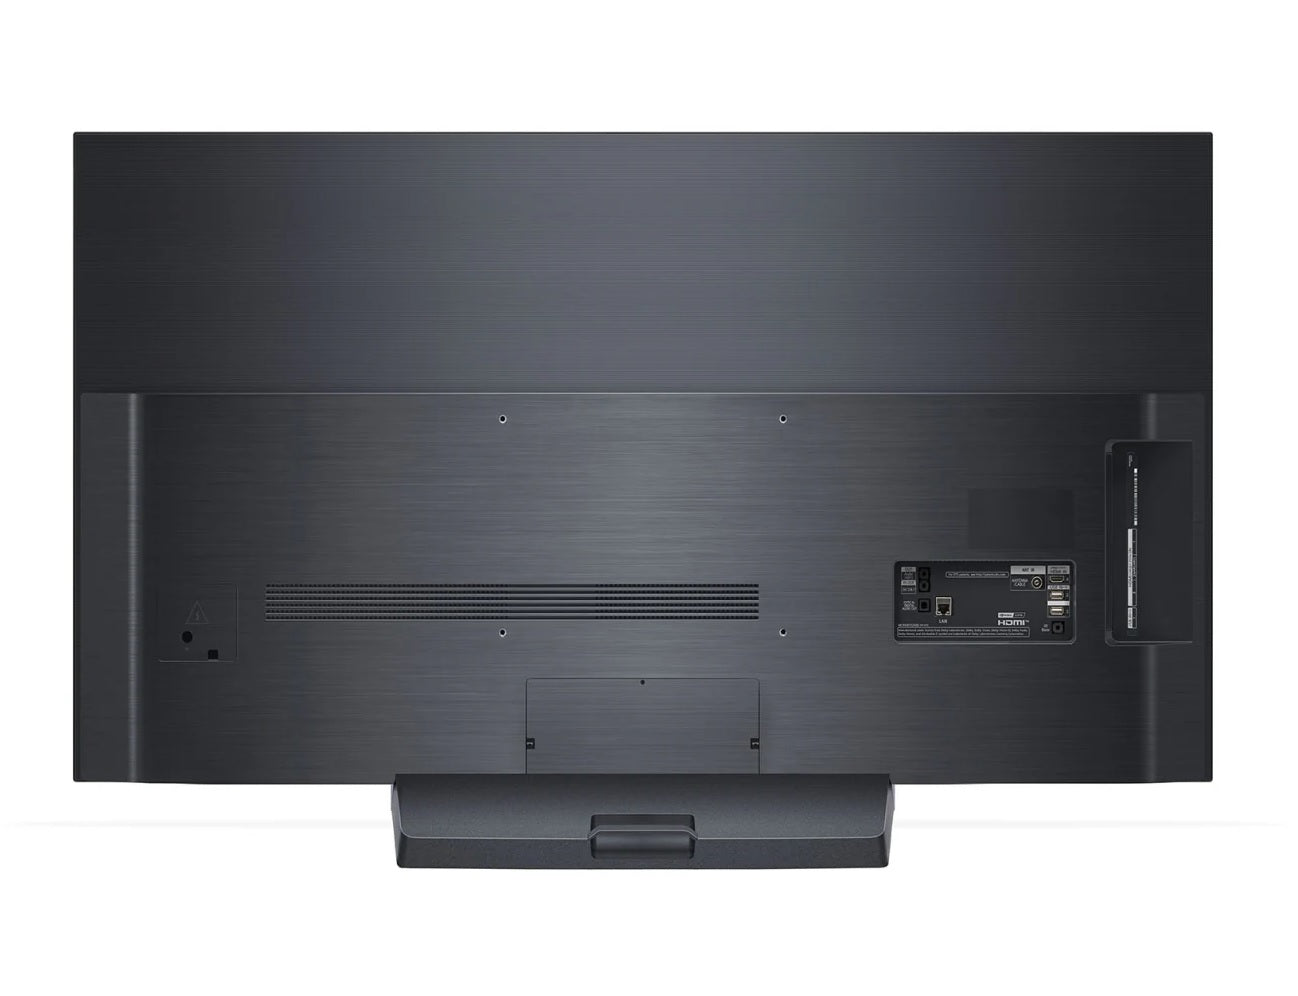 LG 樂金 C3 4K OLED evo 智能電視